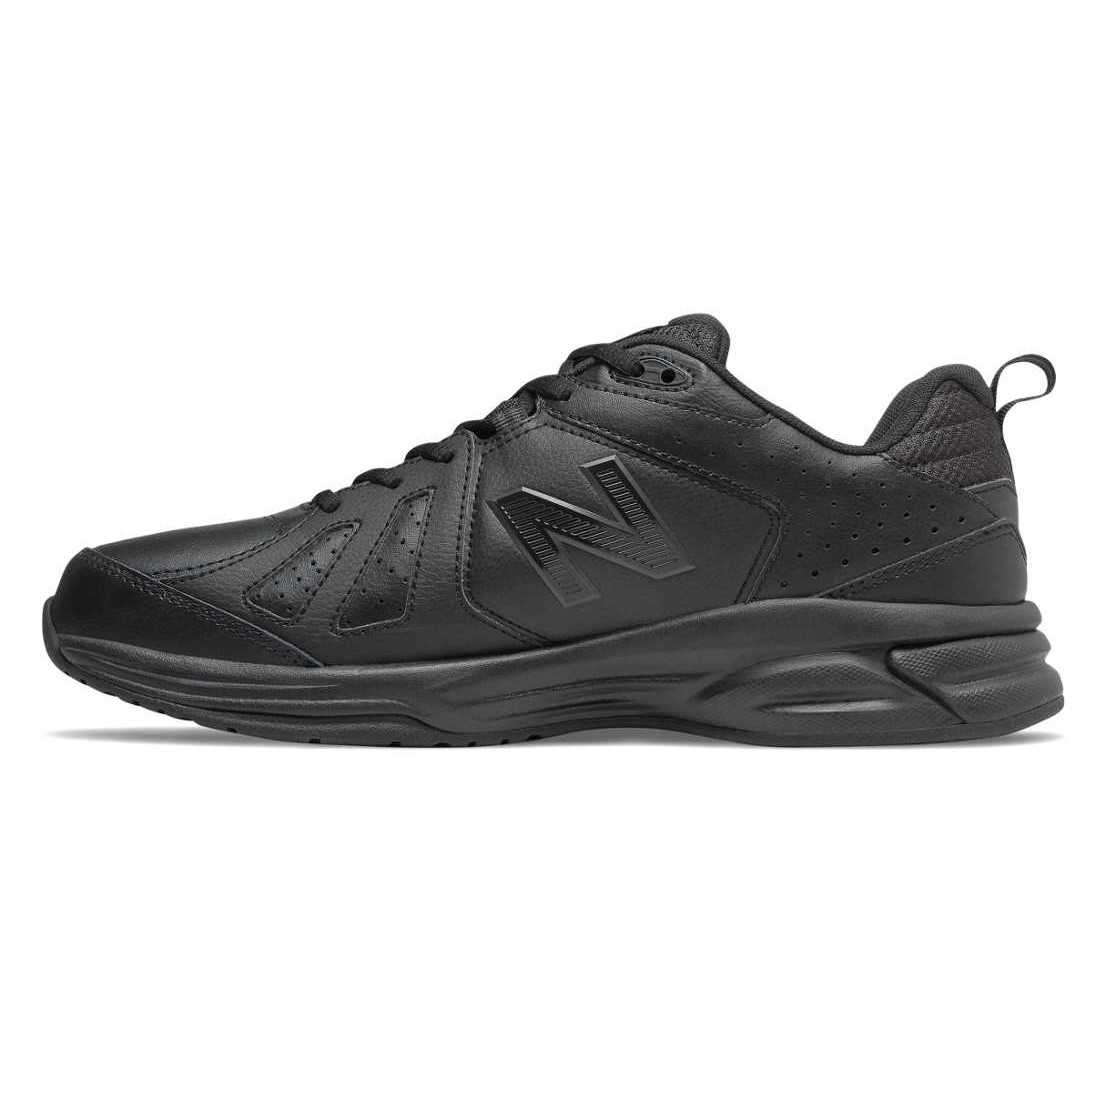 New Balance 624v5 - Mens Cross Training Shoes - Black | Sportitude